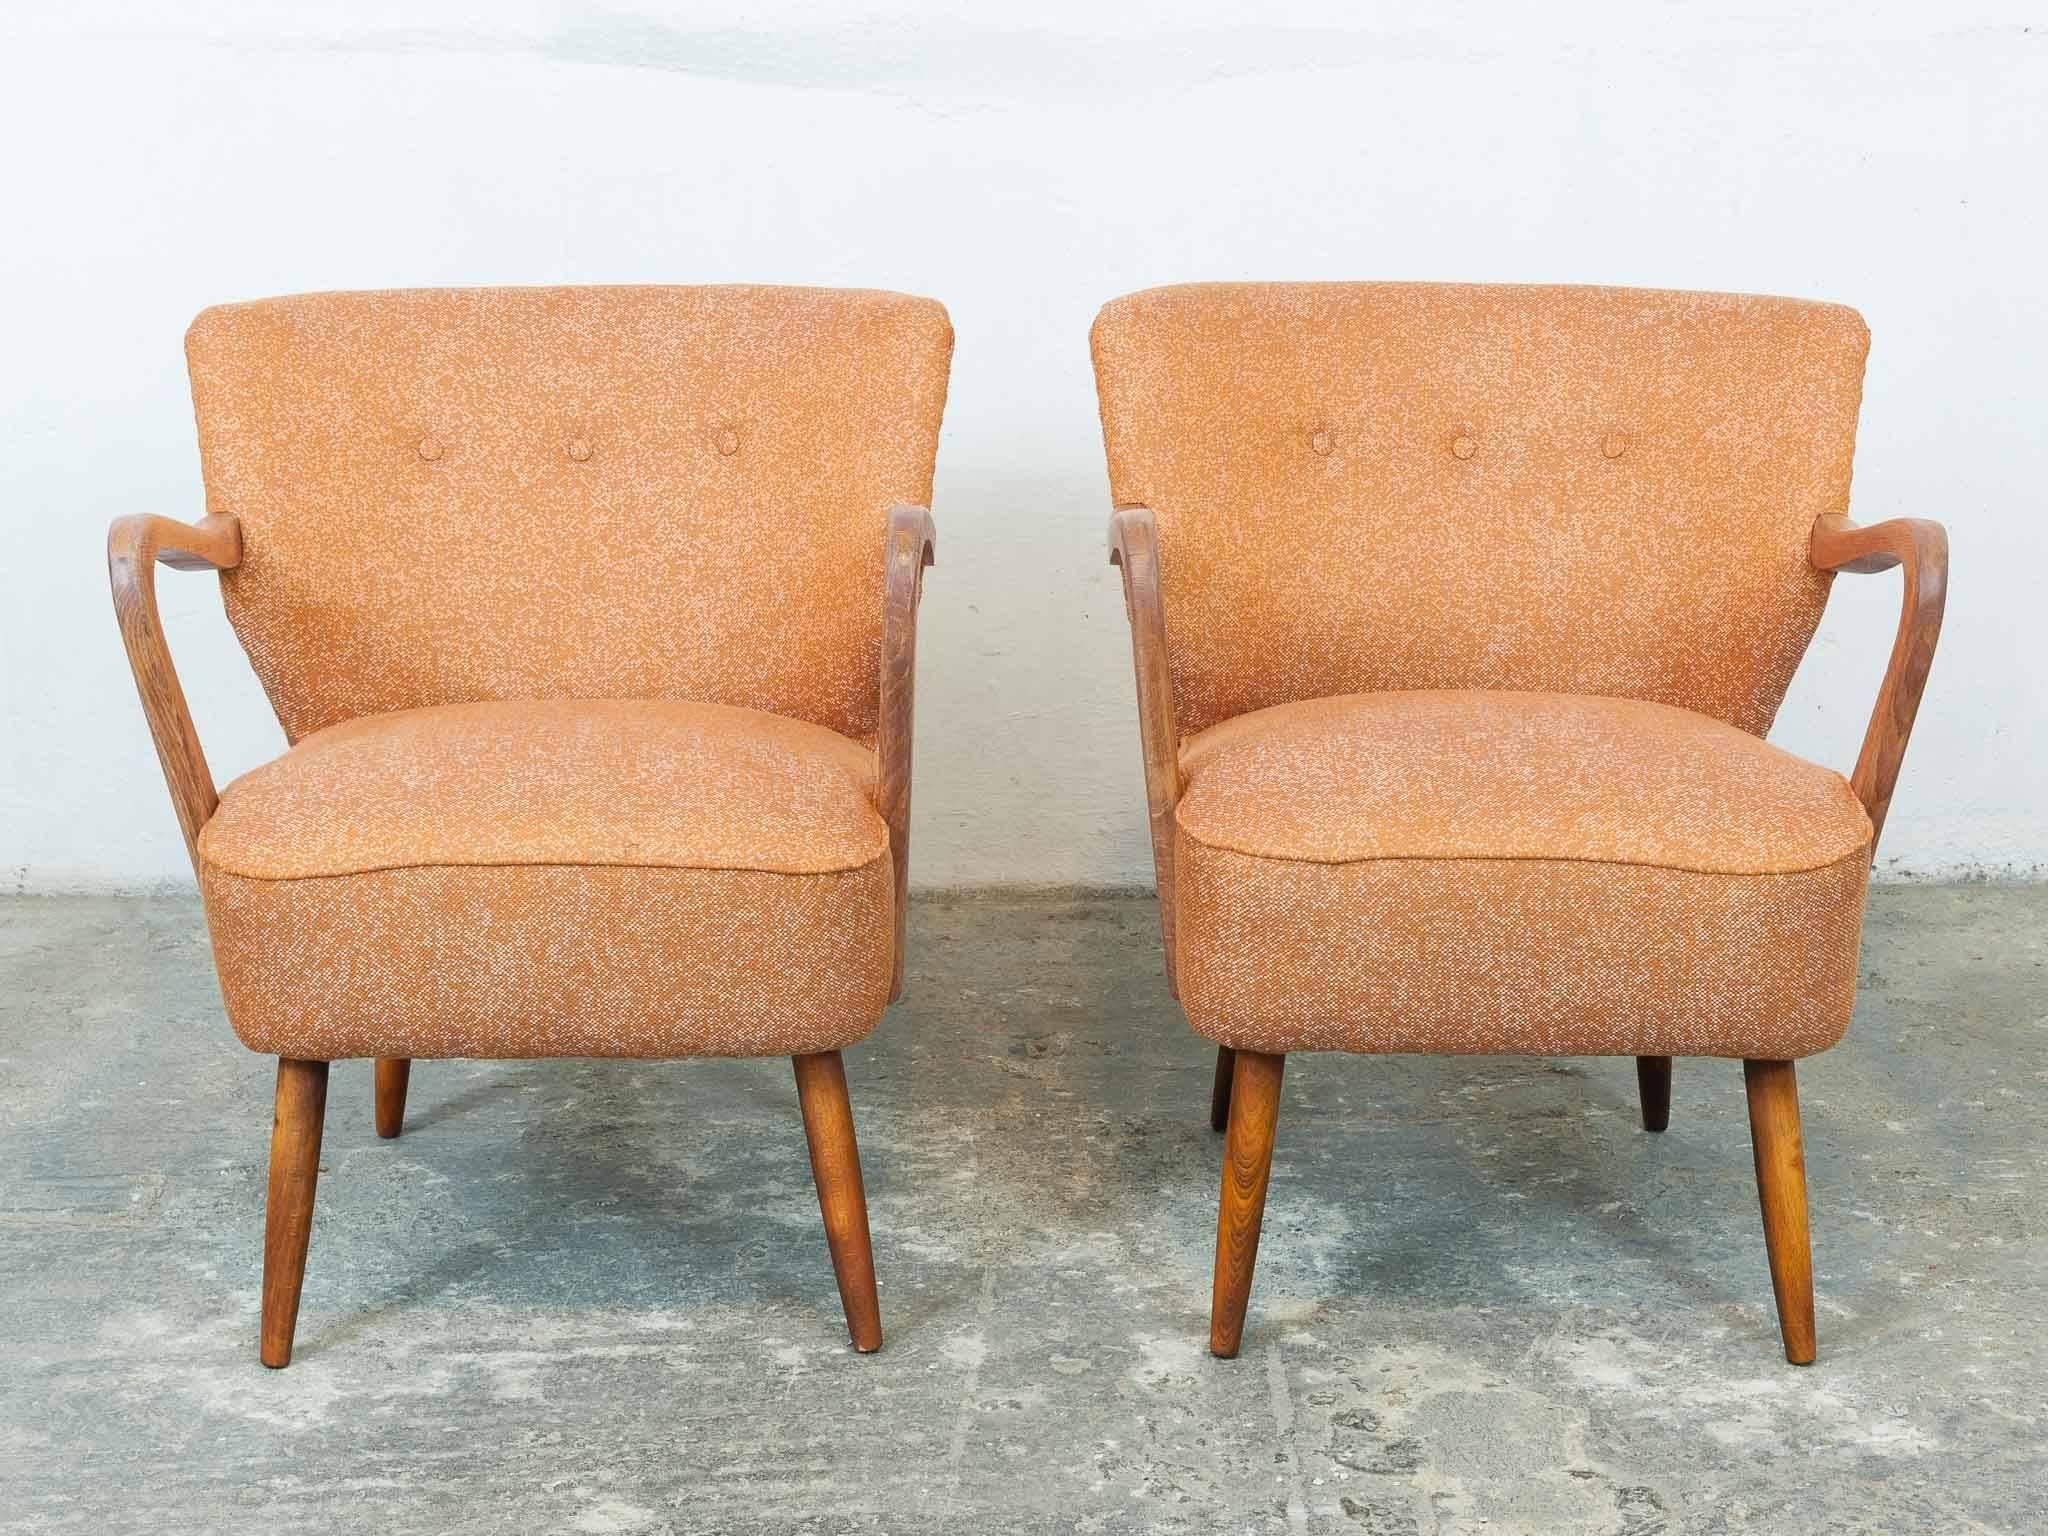 Teak Pair of 1940s Vintage Midcentury Cocktail Chairs in Astro Orange Fabric